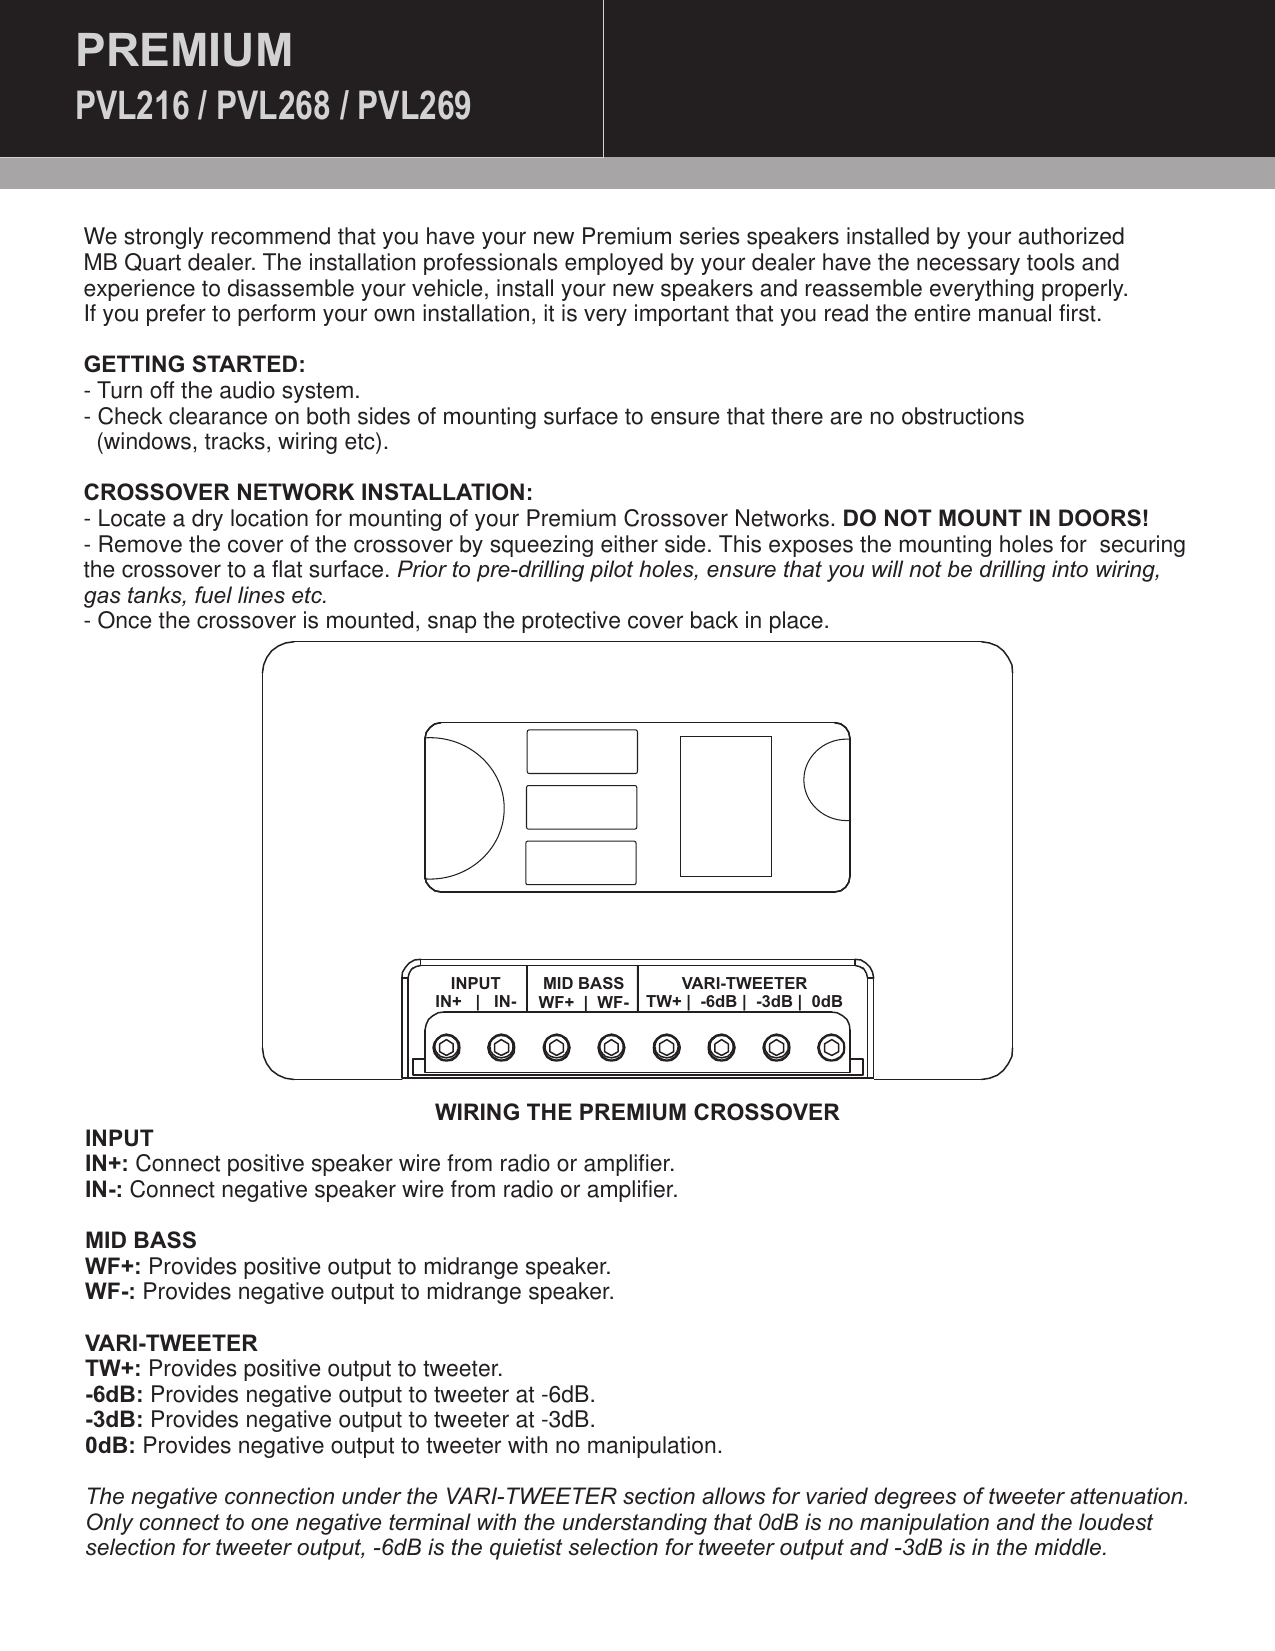 Page 6 of 10 - Mb-Quart Mb-Quart-Pvl216-Users-Manual- MBQ Premium Speaker Manual Front Cover  Mb-quart-pvl216-users-manual